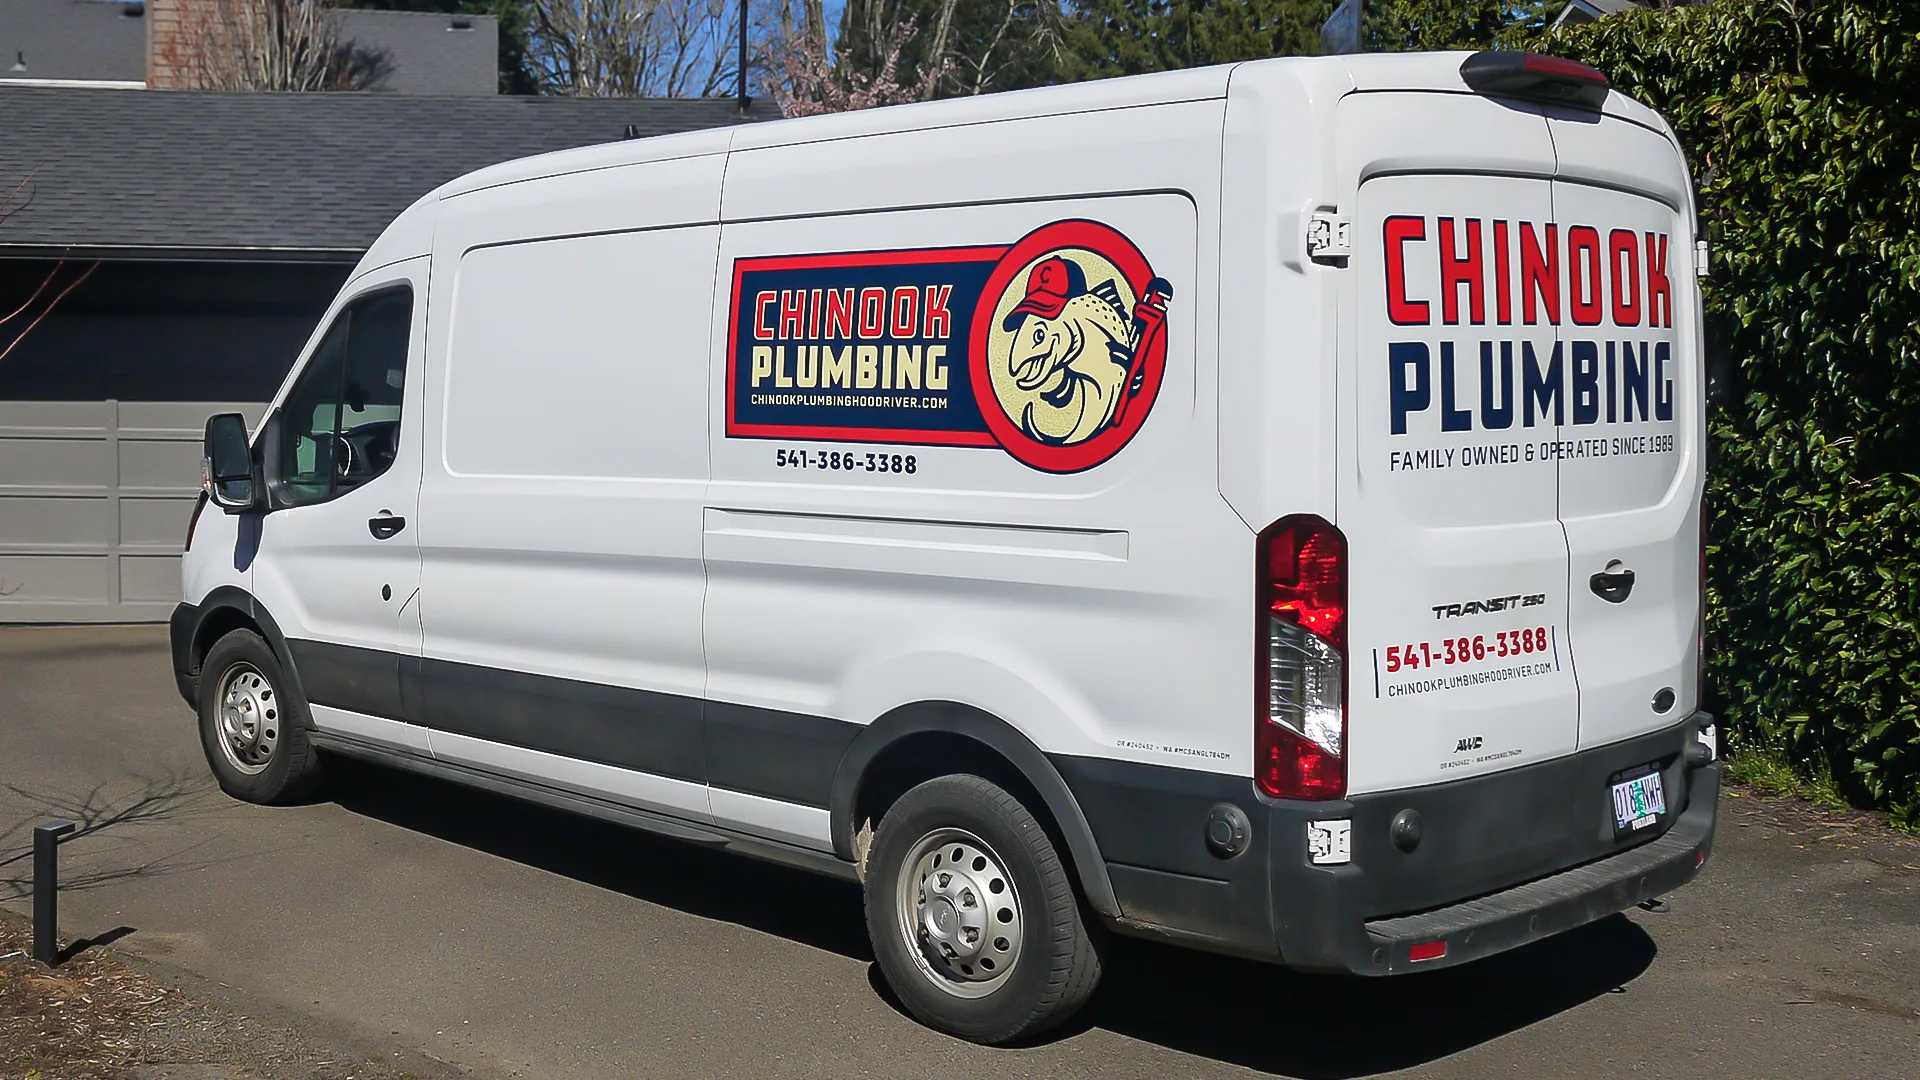 Chinook Plumbing Service vehicle with new branding